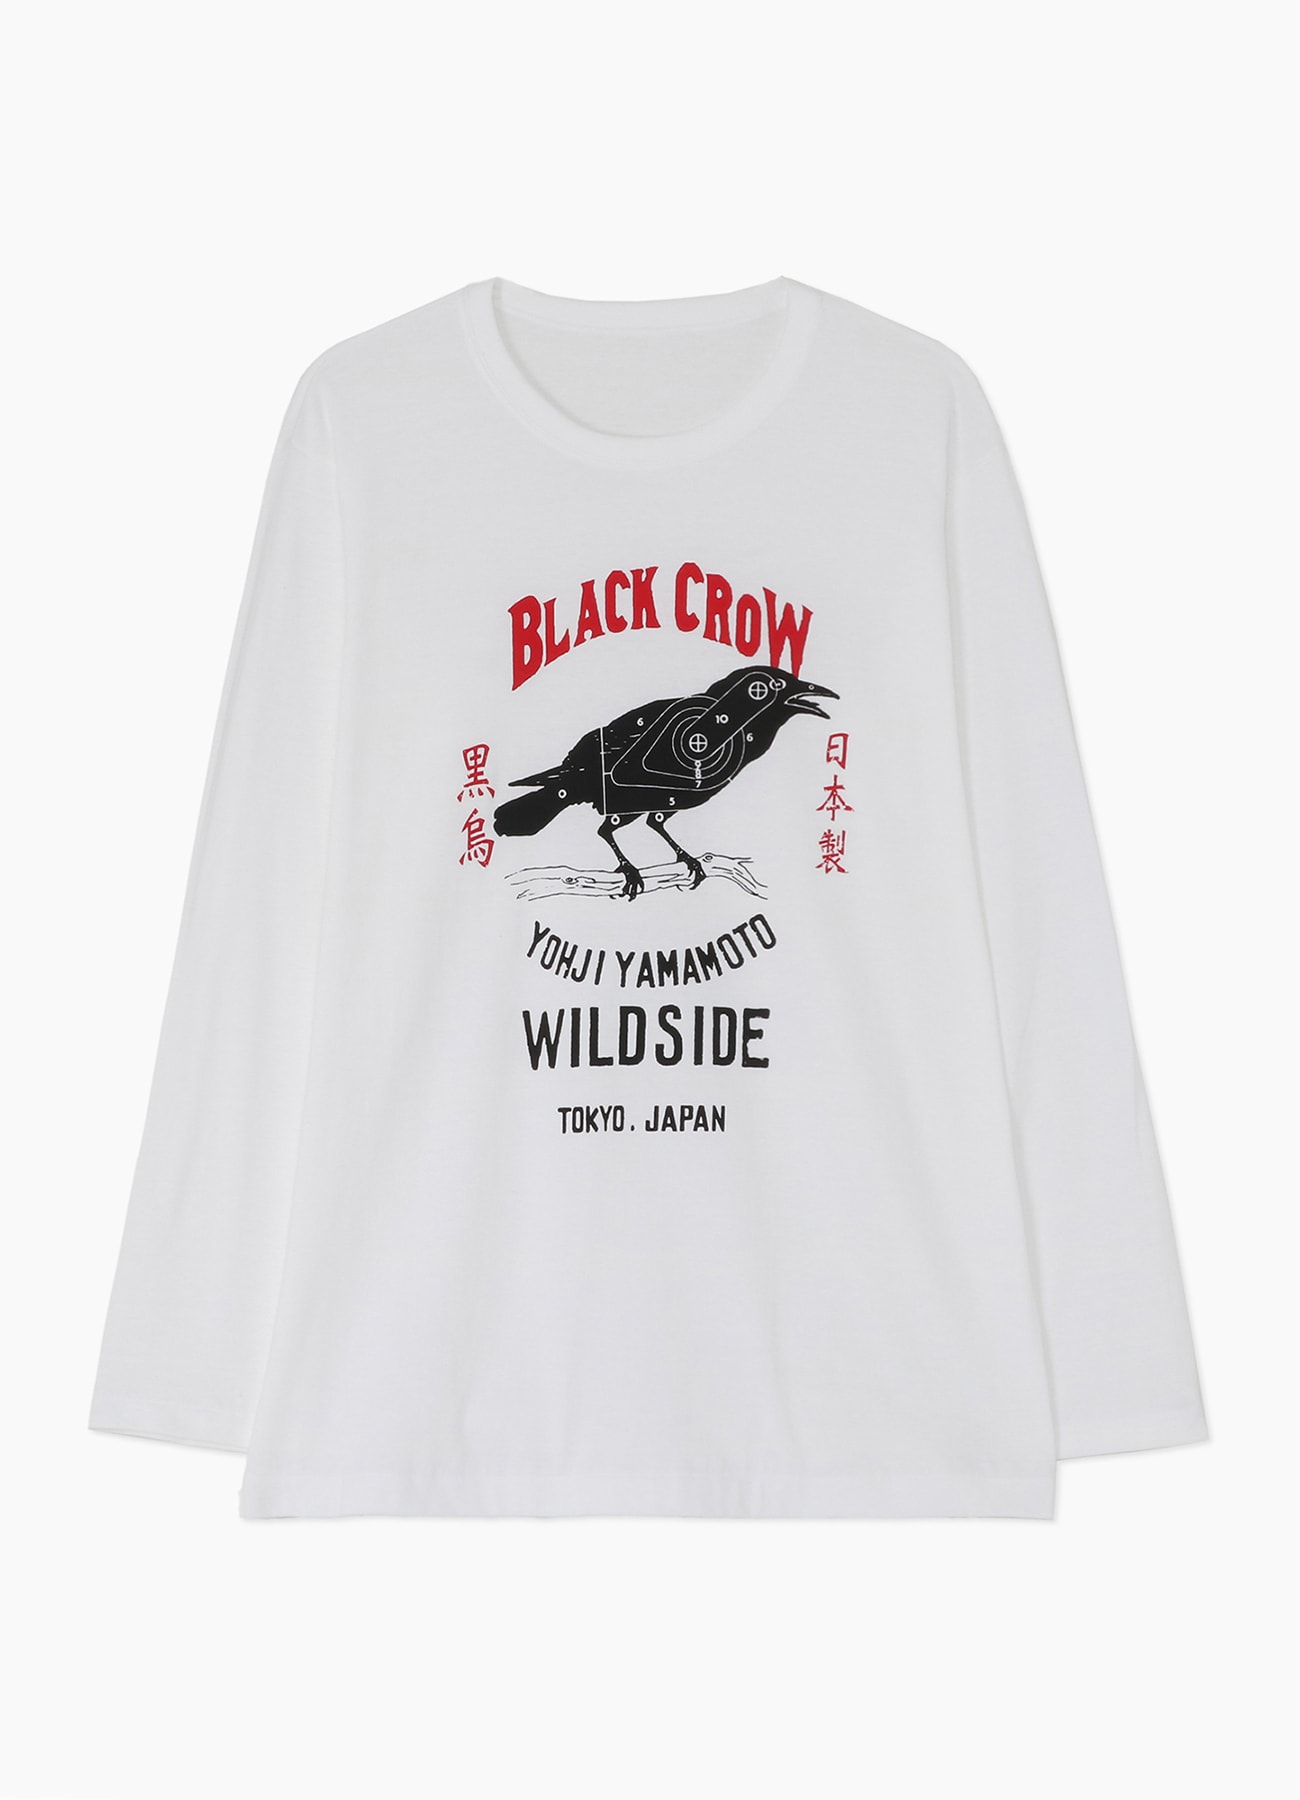 WILDSIDE Black Crow Hunting Long Sleeve T-shirt